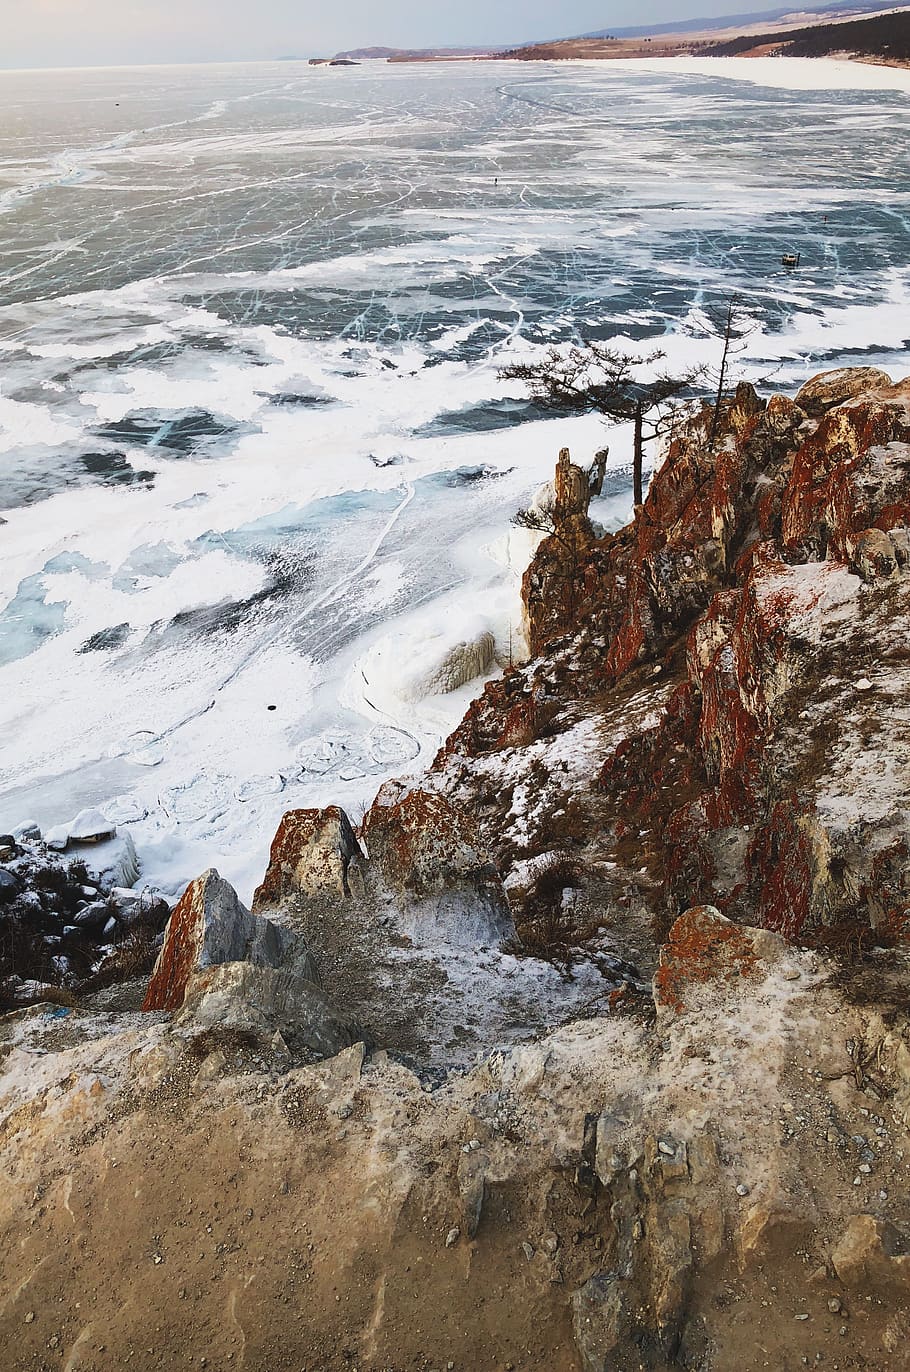 waves crashing on brown rock, outdoors, mountain, nature, ice